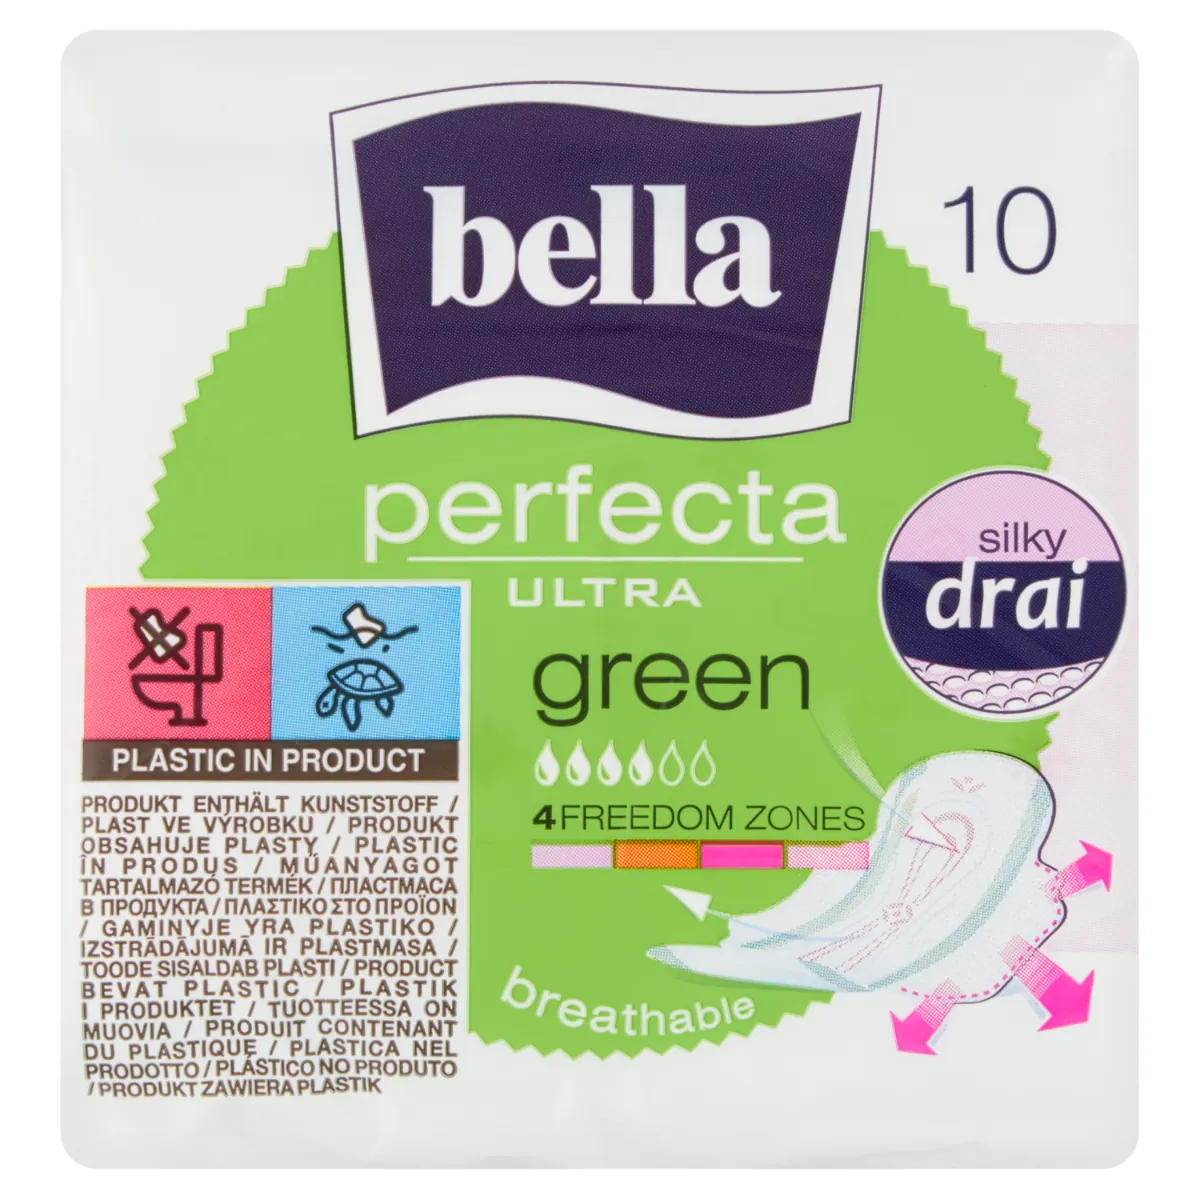 Bella Perfecta Ultra Green Podpaski higieniczne, 10 sztuk